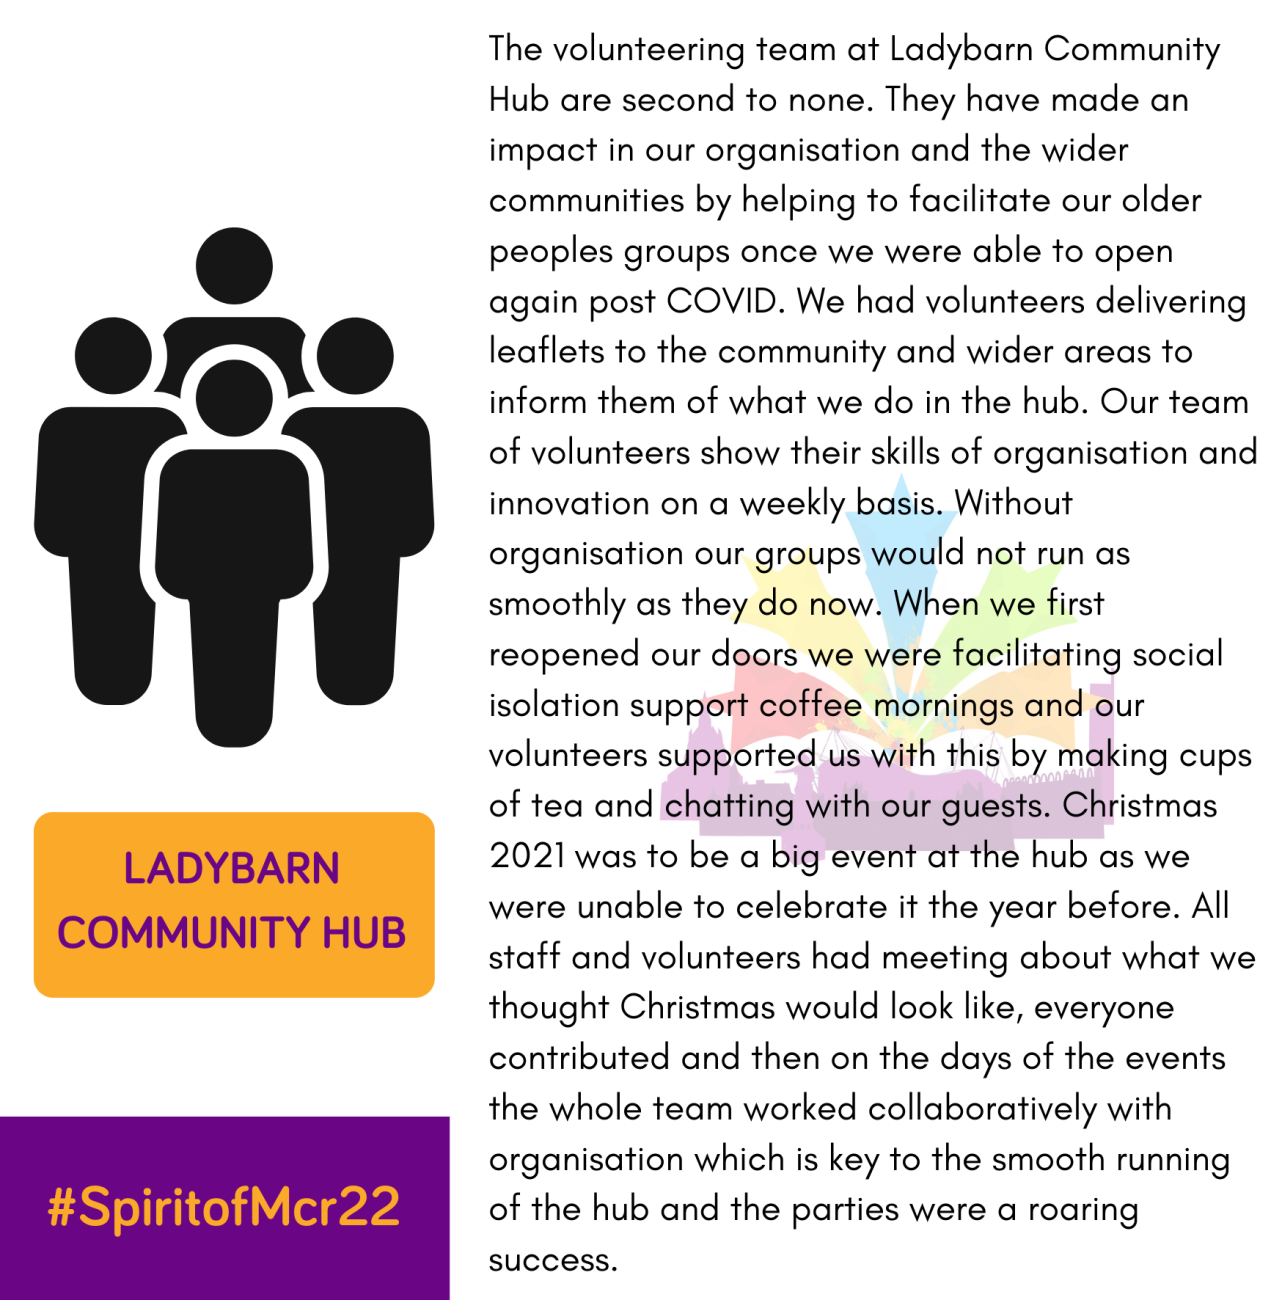 Ladybarn Community Hub